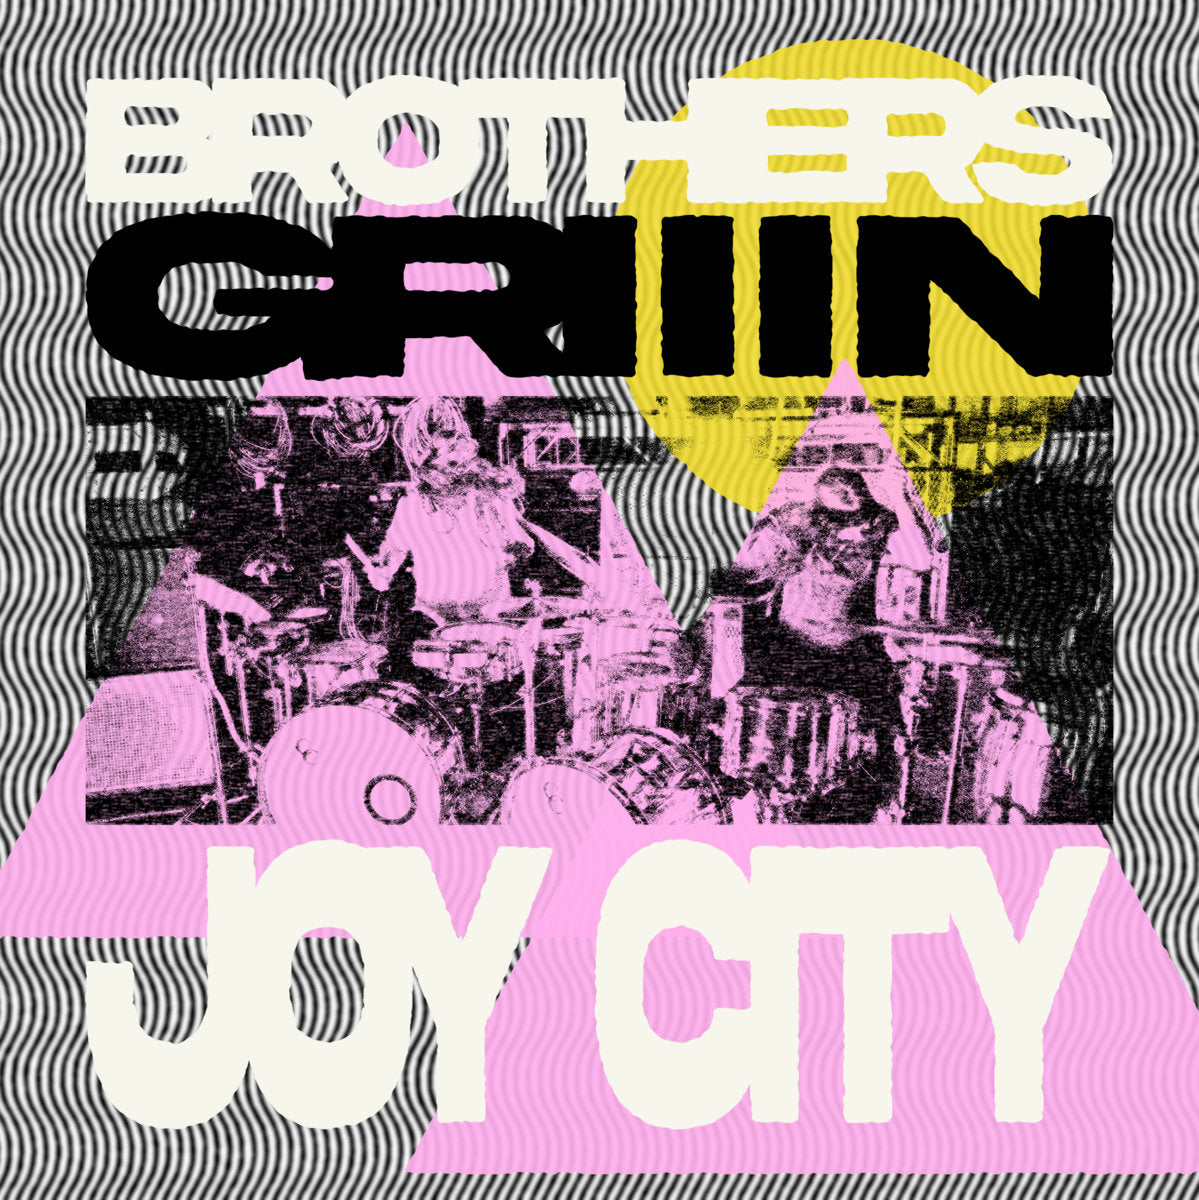 GF175: Brothers Griiin - Joy City cassette